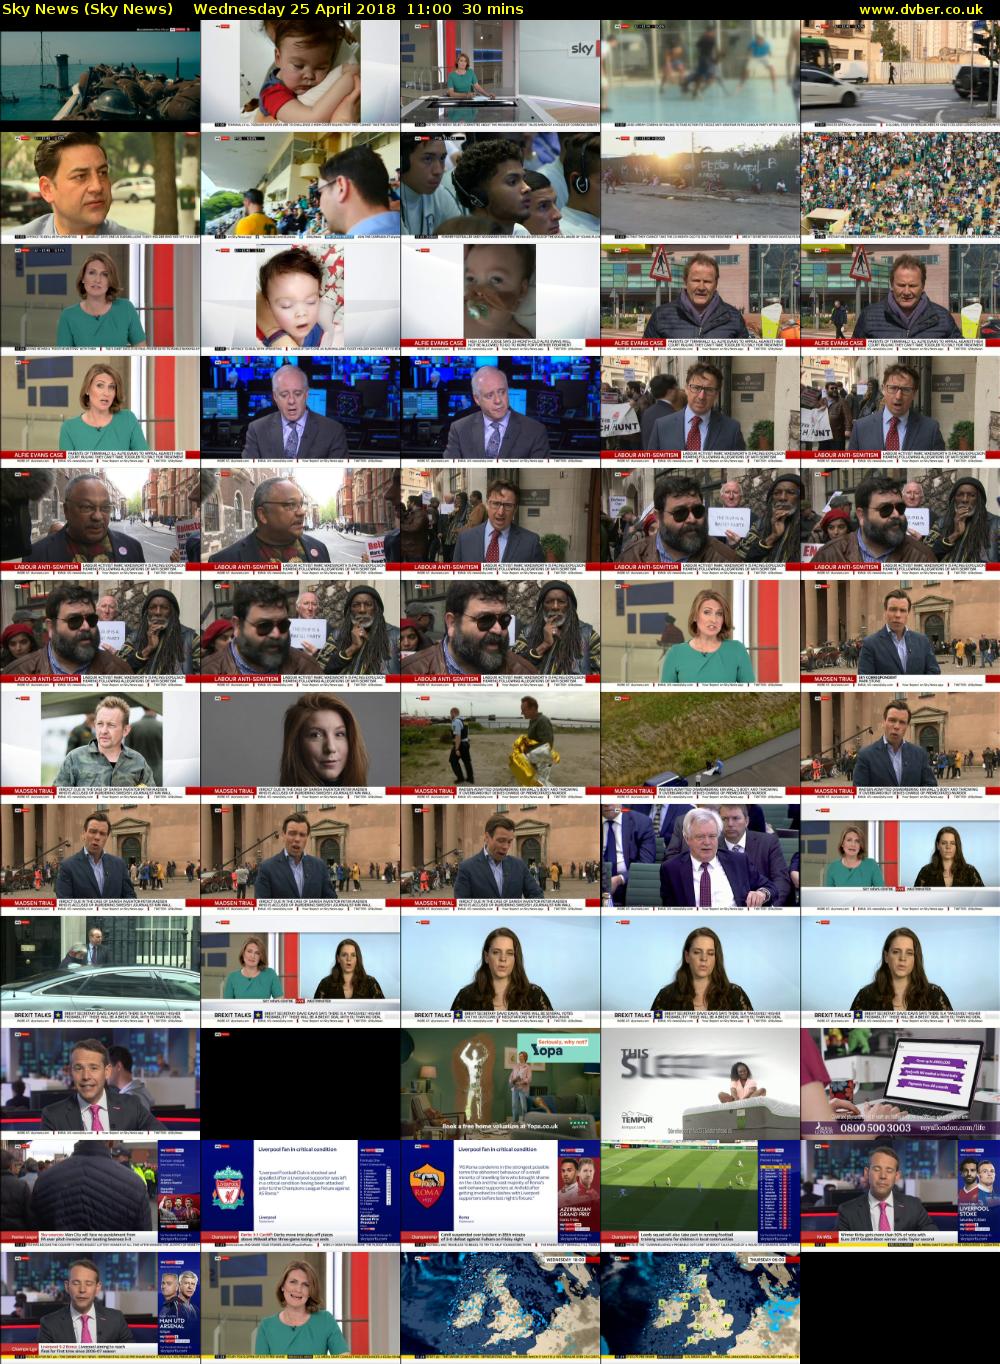 Sky News (Sky News) Wednesday 25 April 2018 11:00 - 11:30